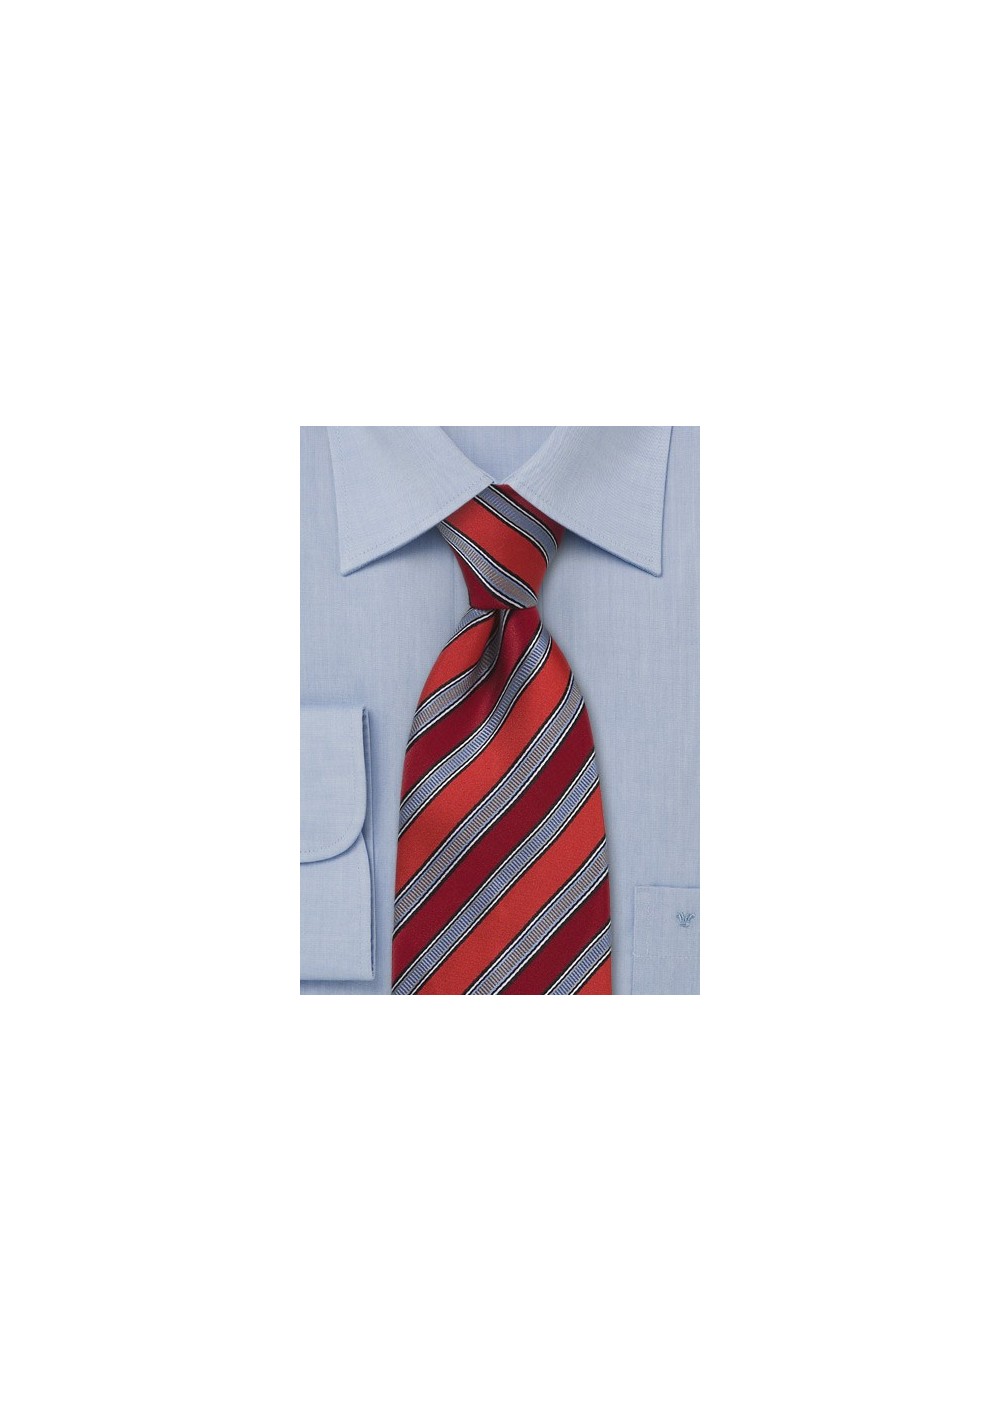 Bold Red Striped Tie